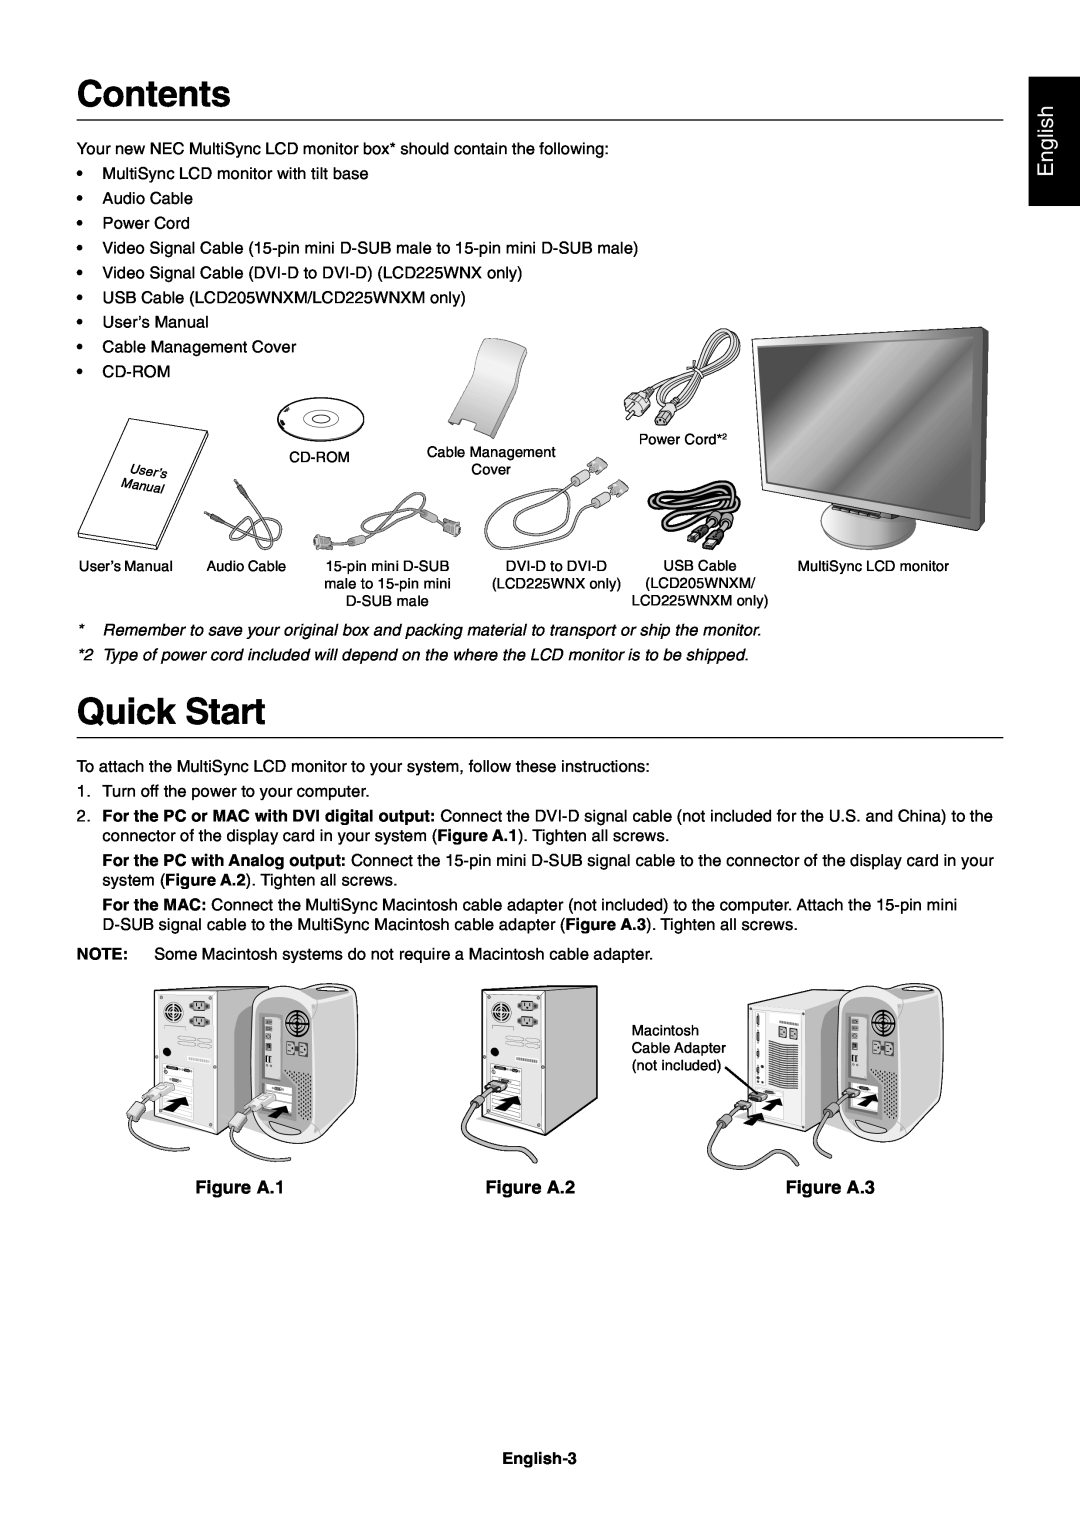 NEC LCD225WNXM, LCD205WNXM user manual Contents, Quick Start, English, Figure A.1, Figure A.2, Figure A.3 